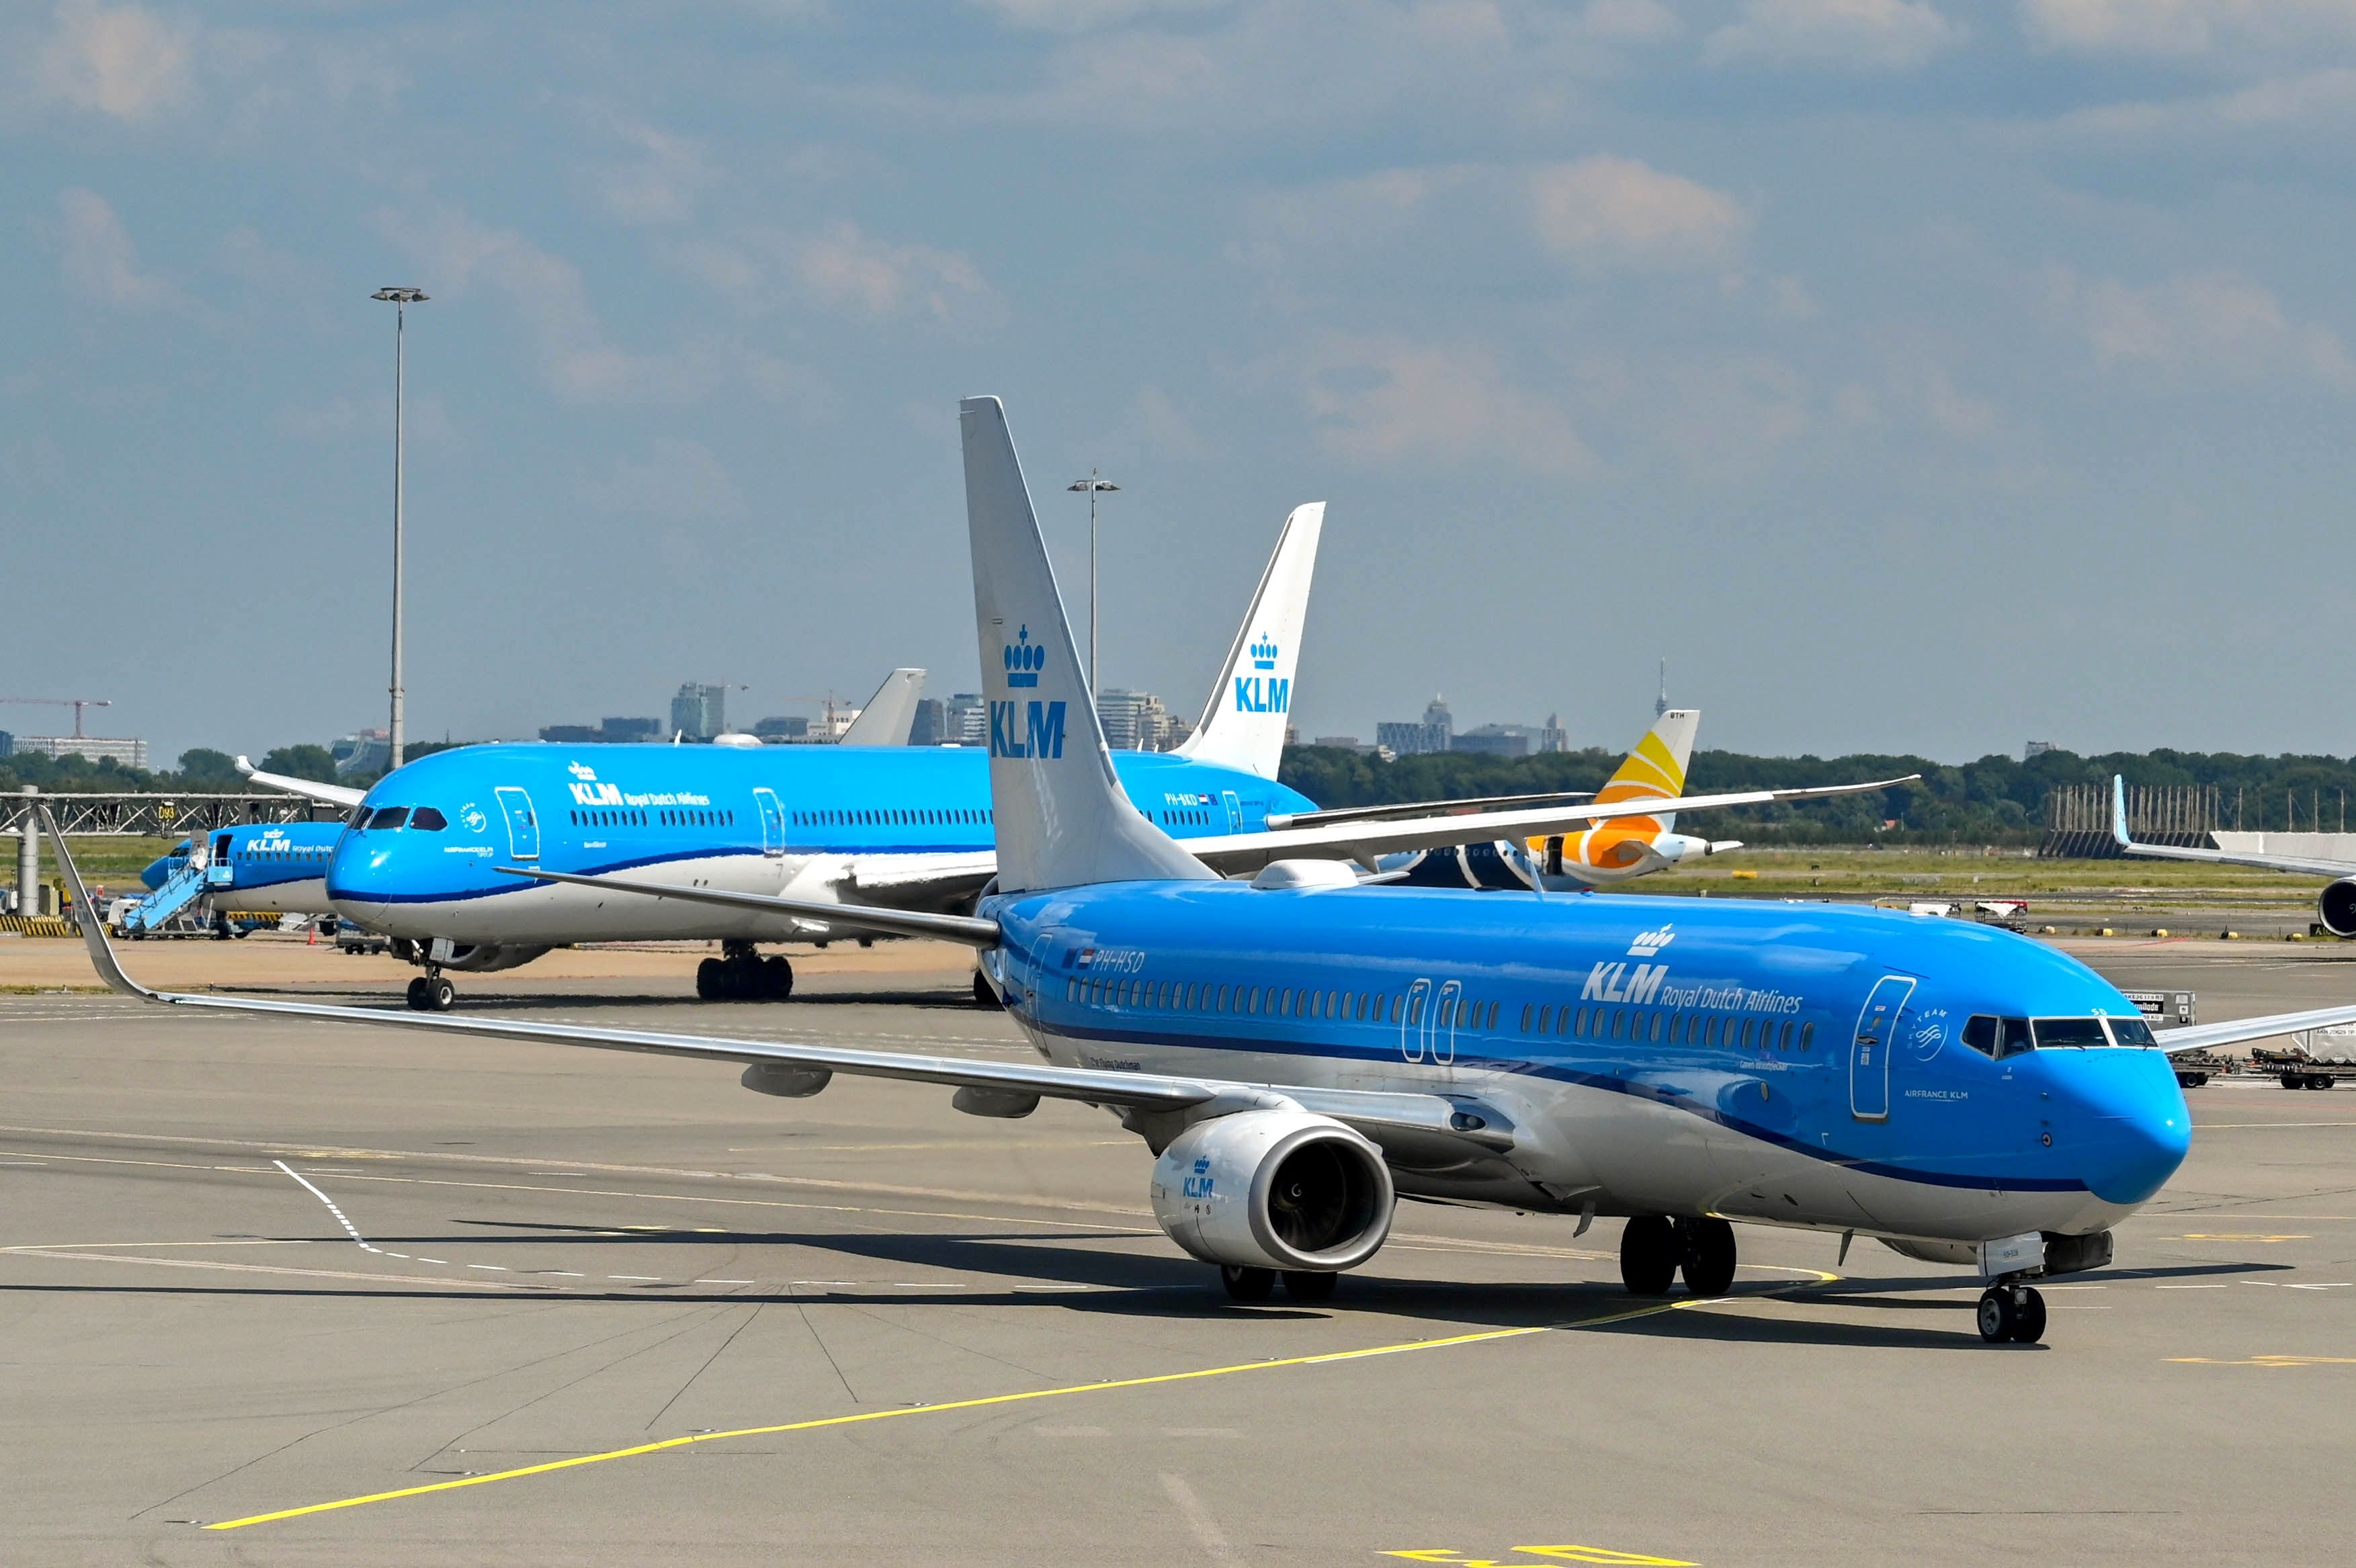 KLM at Amsterdam Schiphol Airport